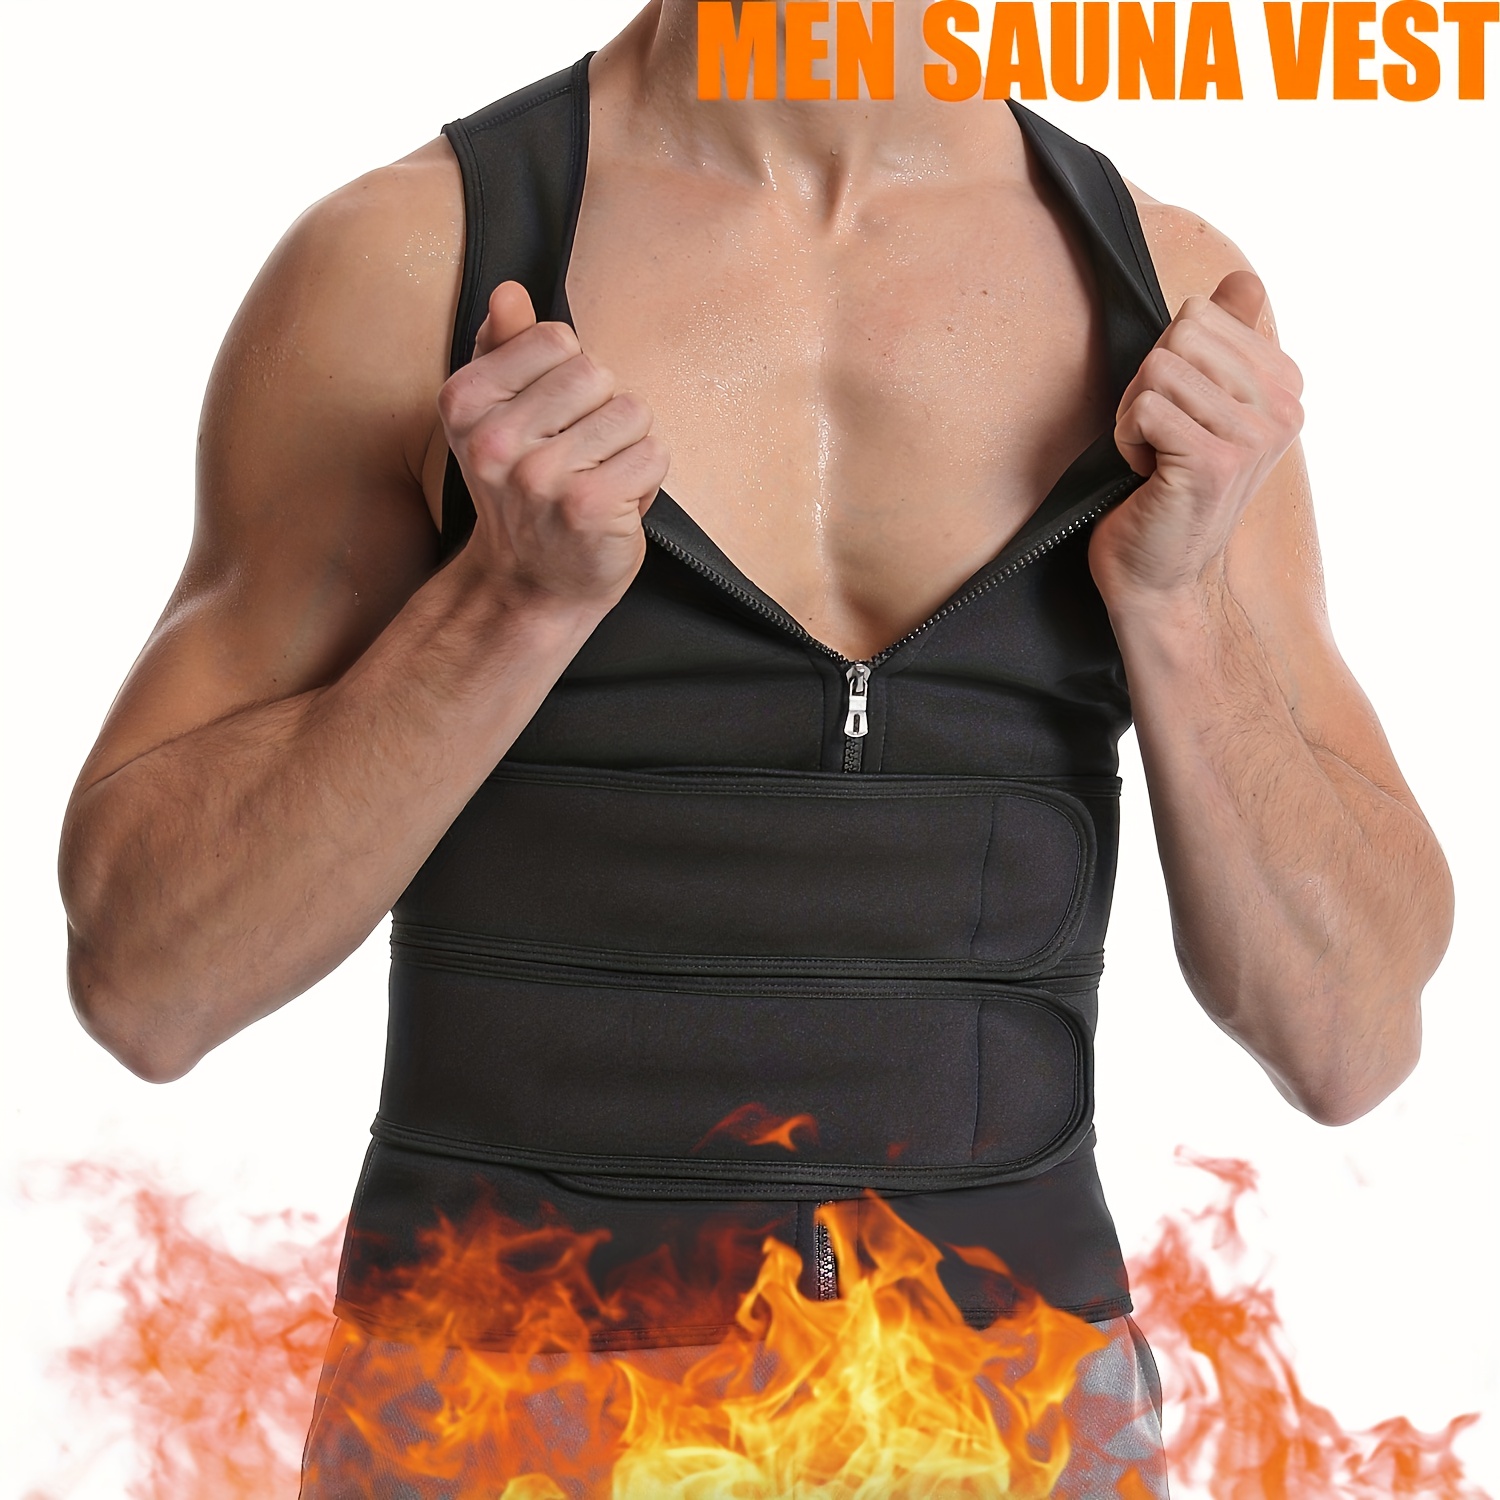 Mens Sweat Vest, Mens Sauna Vest